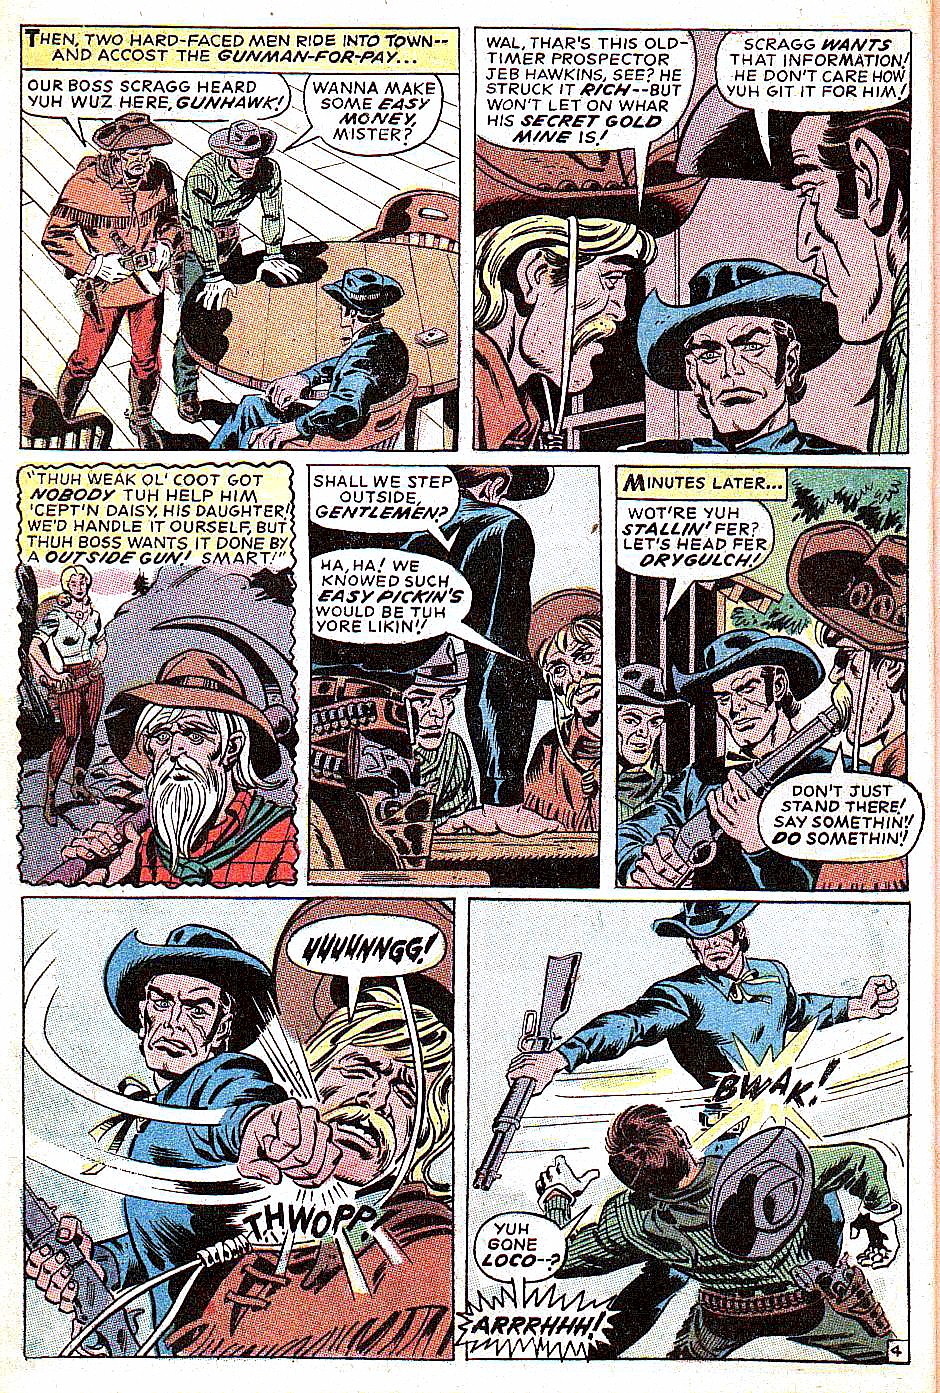 Read online Western Gunfighters comic -  Issue #1 - 5